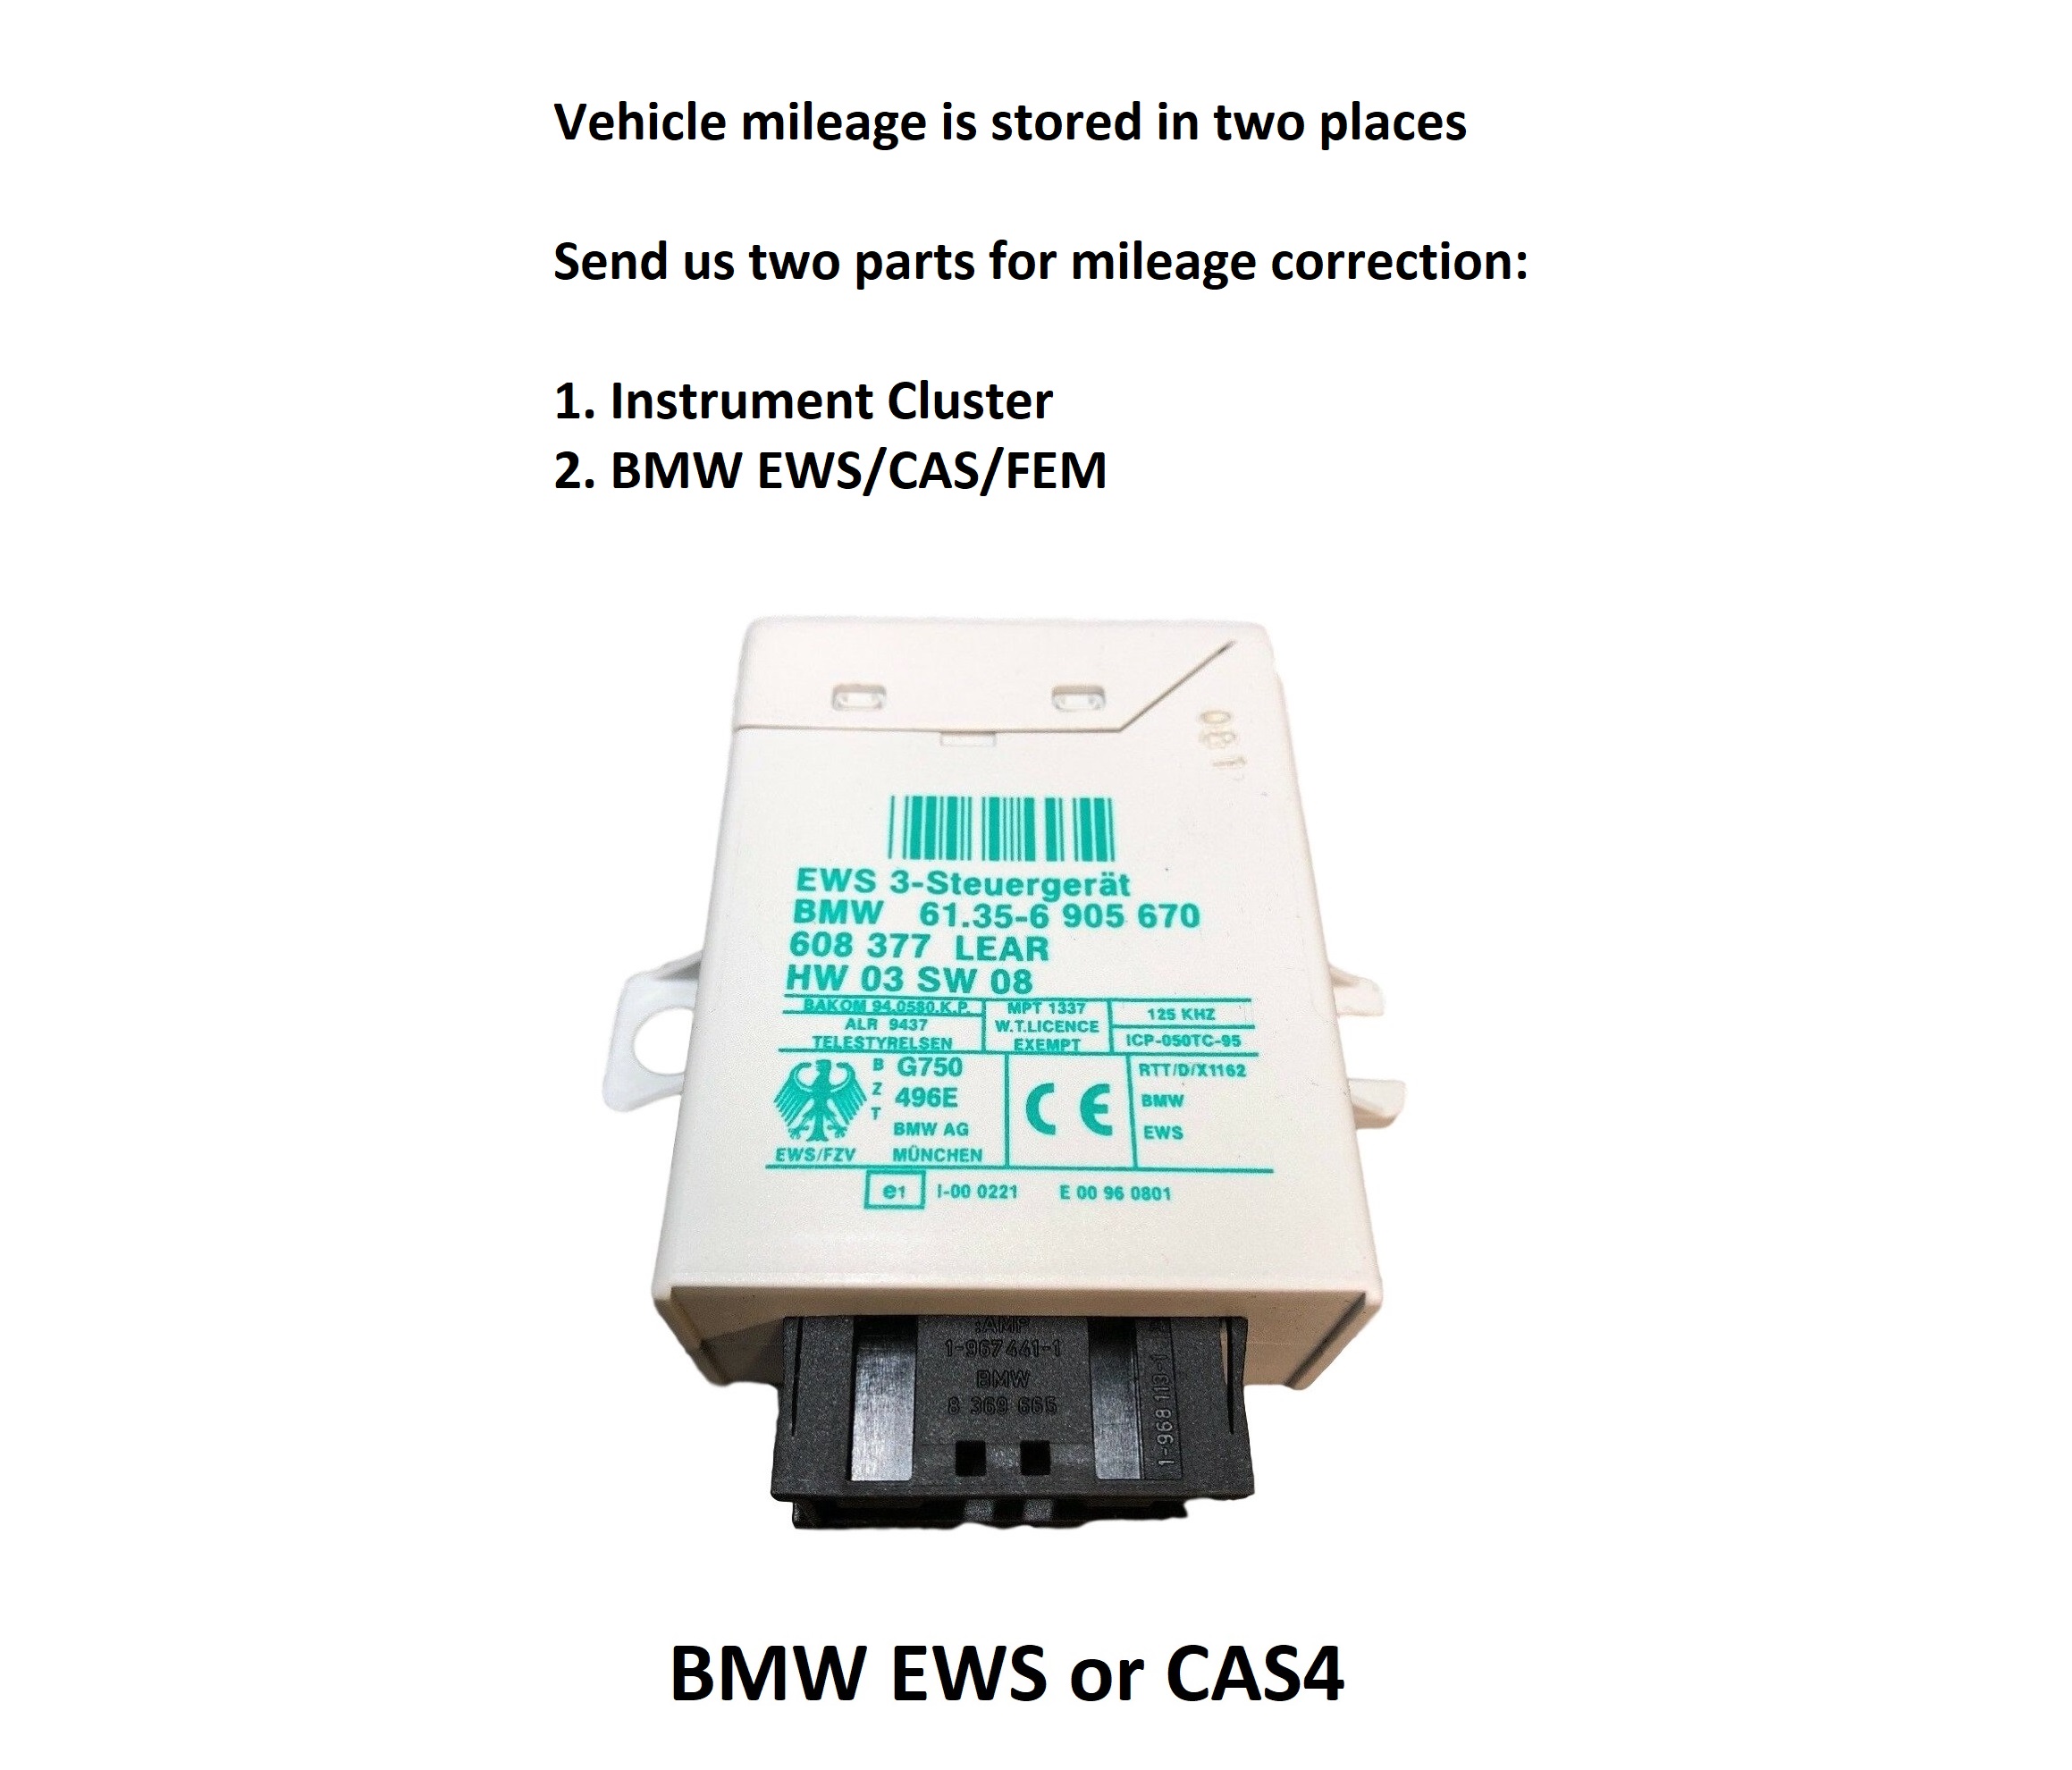 BMW X4 (1996-2023) Odometer Mileage Adjust Correction Service